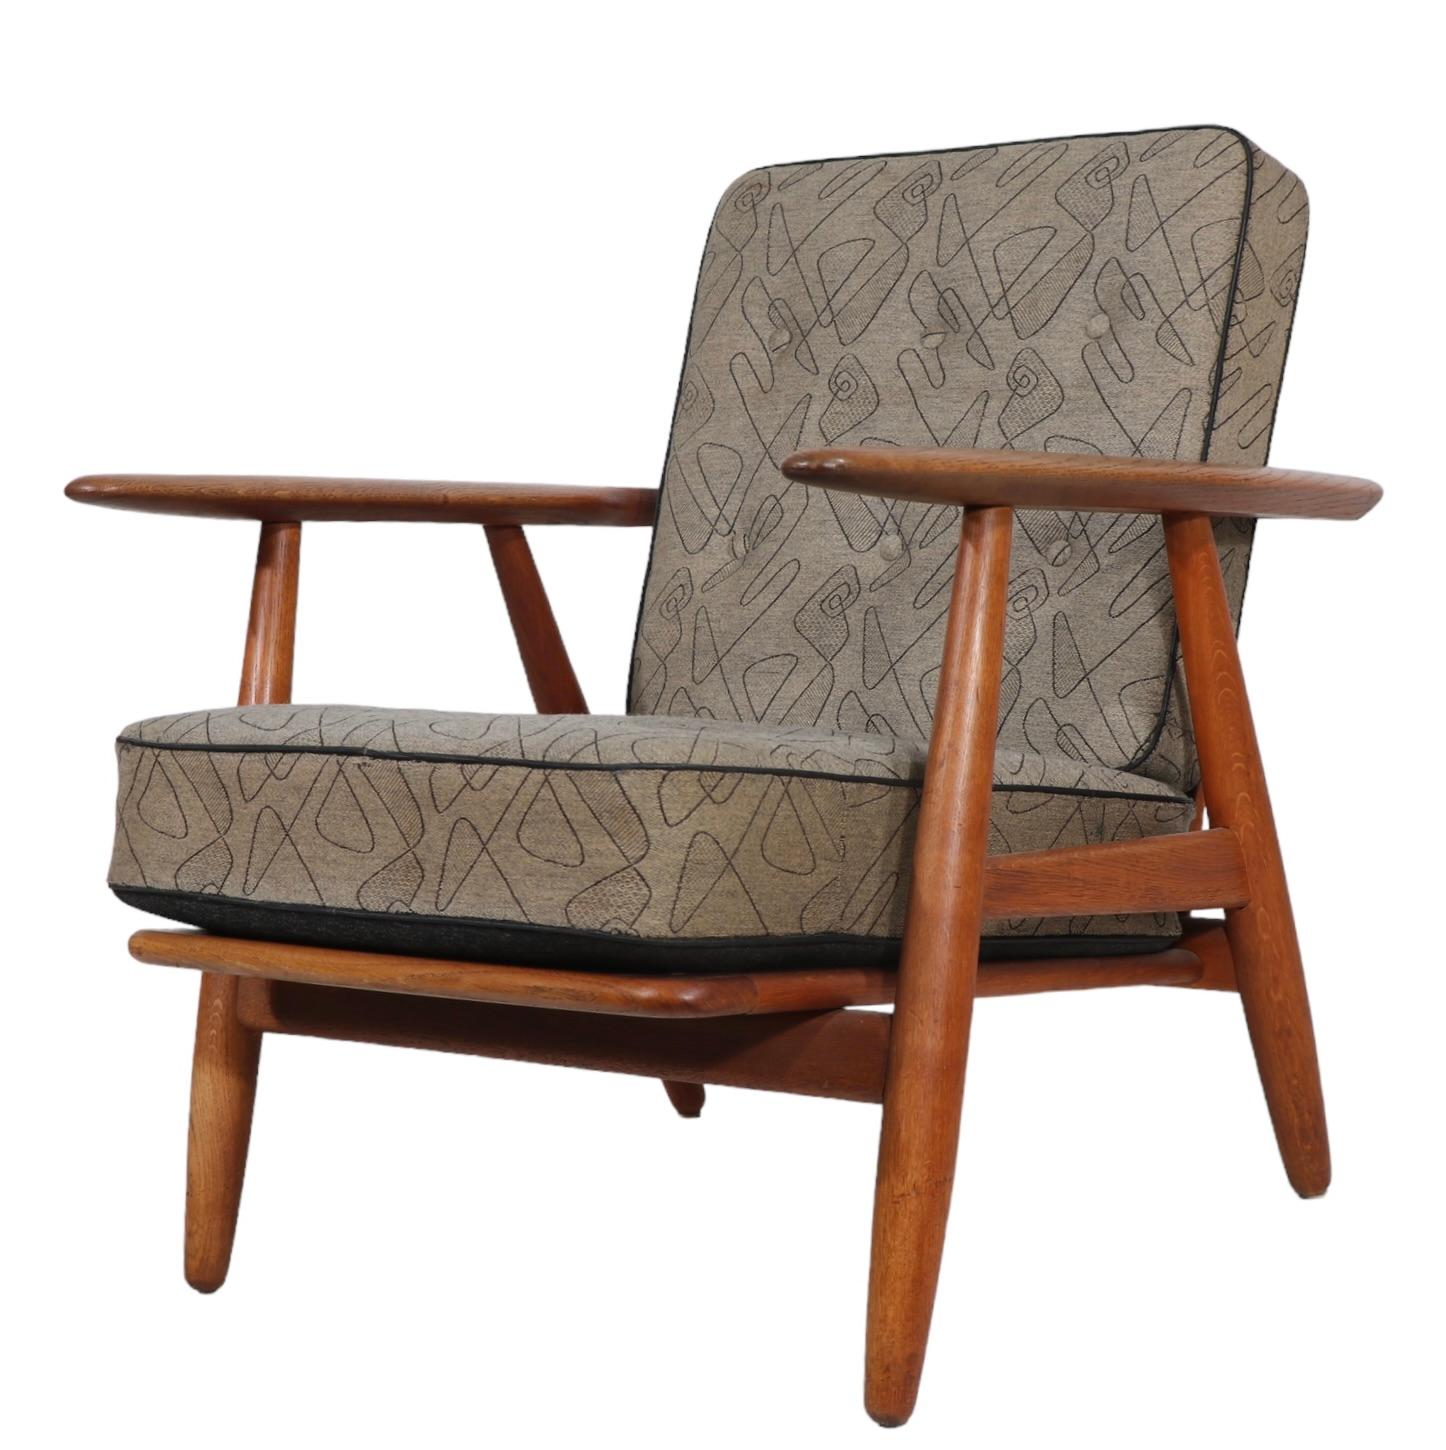 Original Hans Wegner Cigar Chair Made in Denmark for GETAMA c 1950's For Sale 3